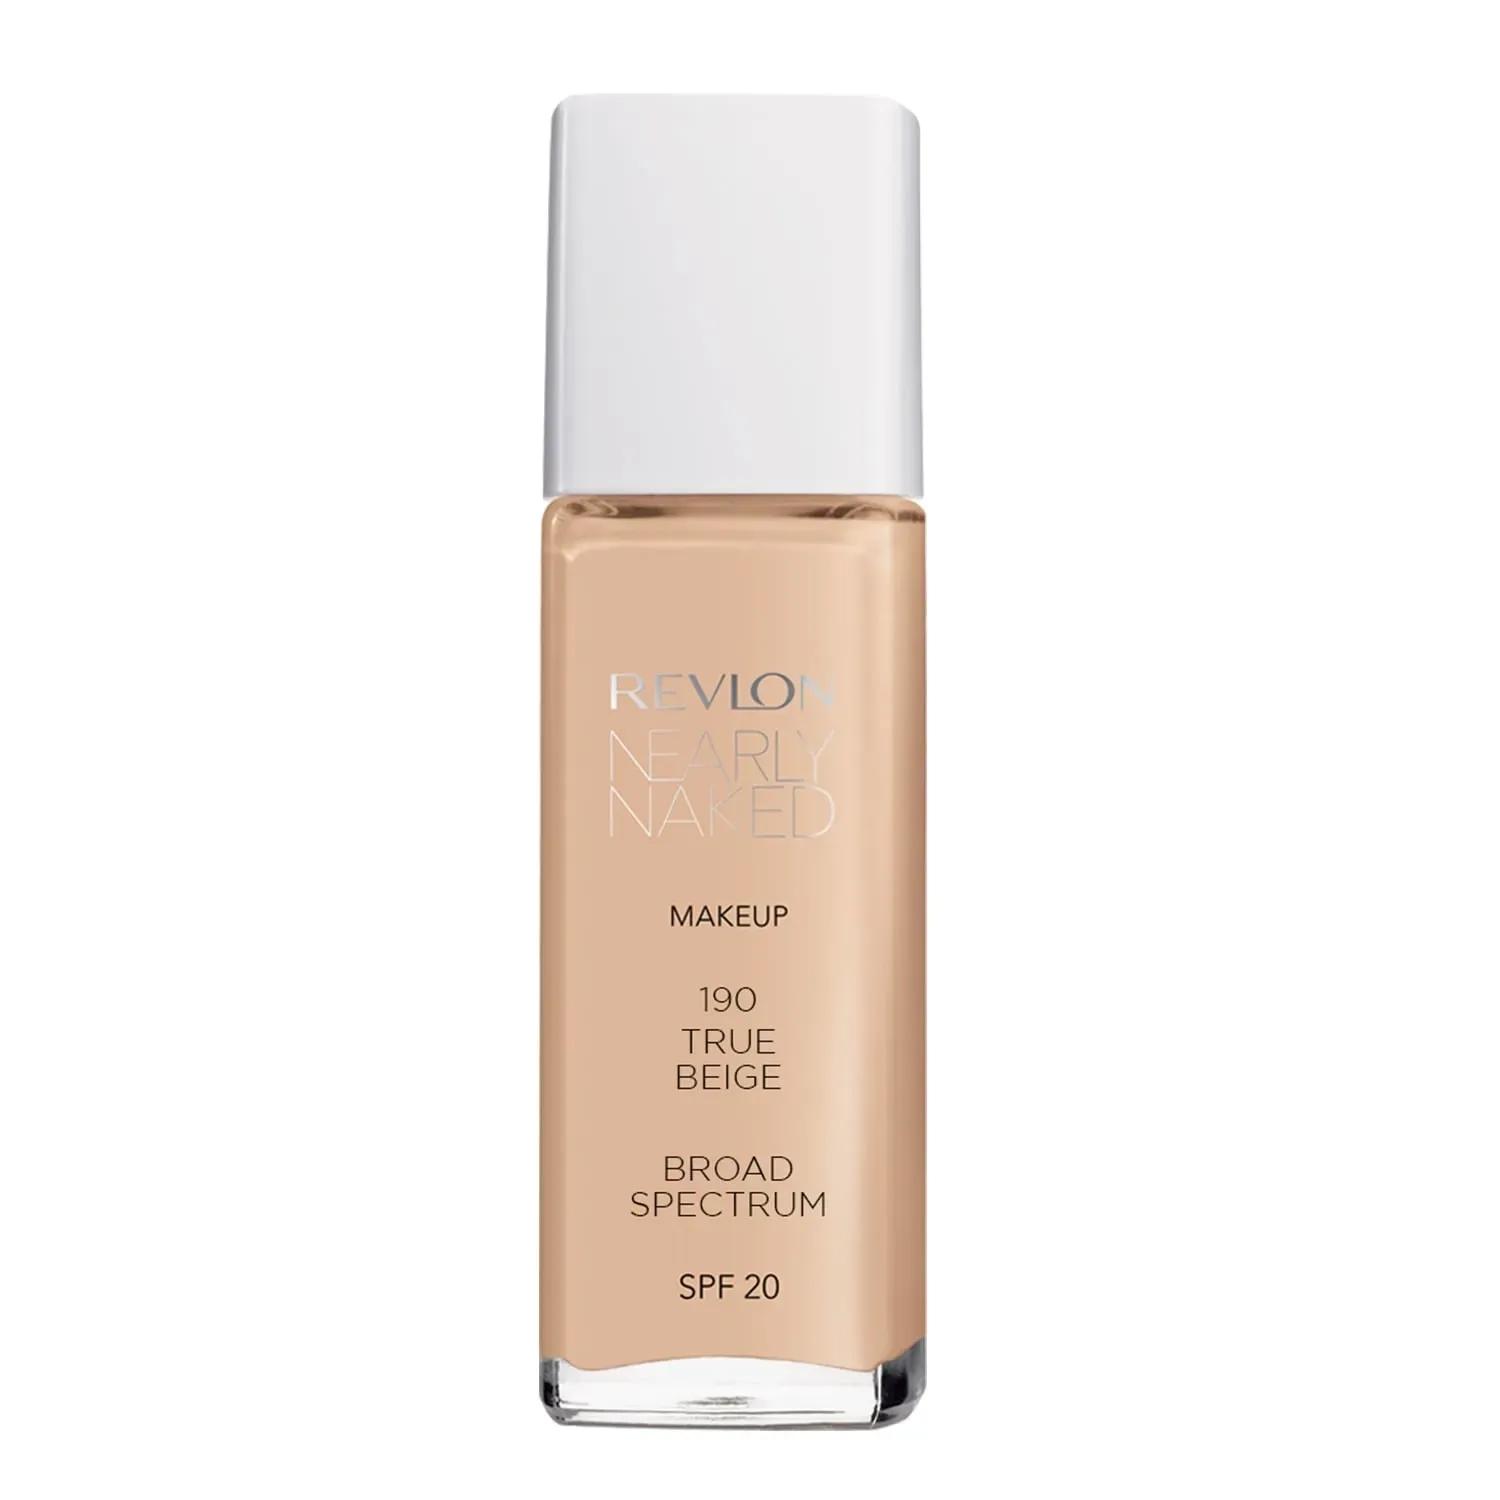 revlon nearly naked makeup foundation - 190 true beige (30ml)